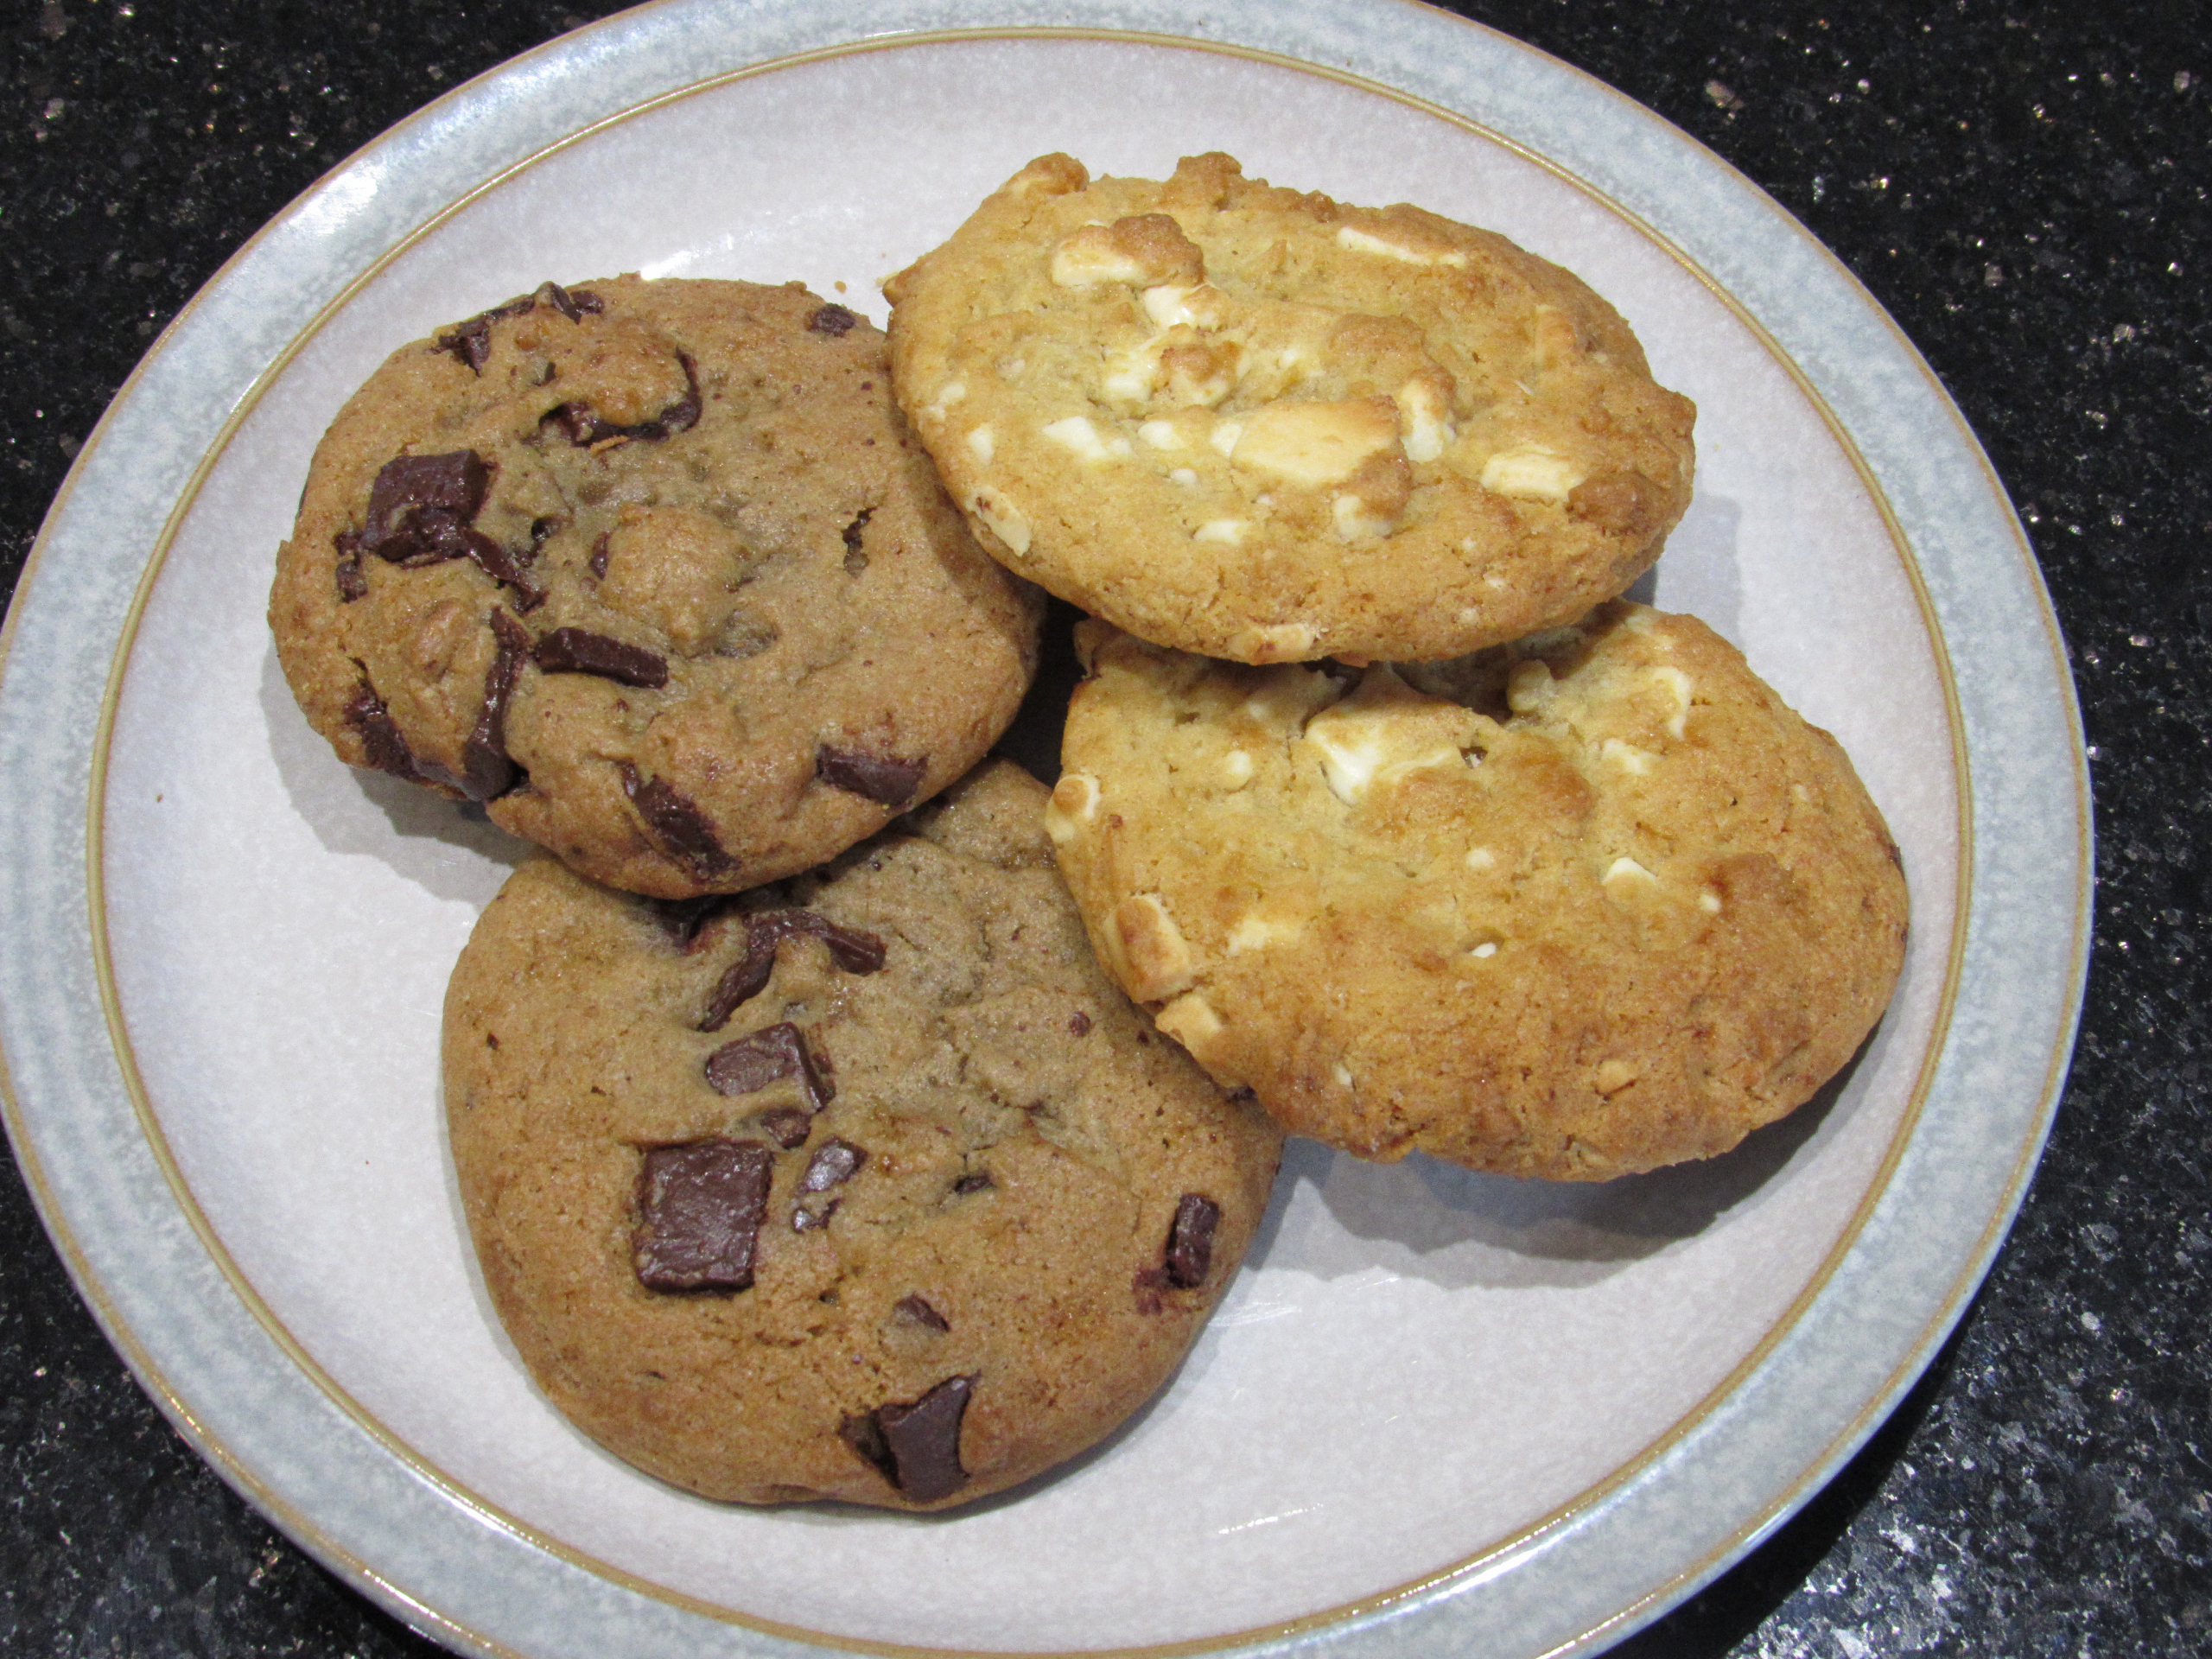 Cafe 46 Wickham Market - Fresh baked chocolate chip cookies